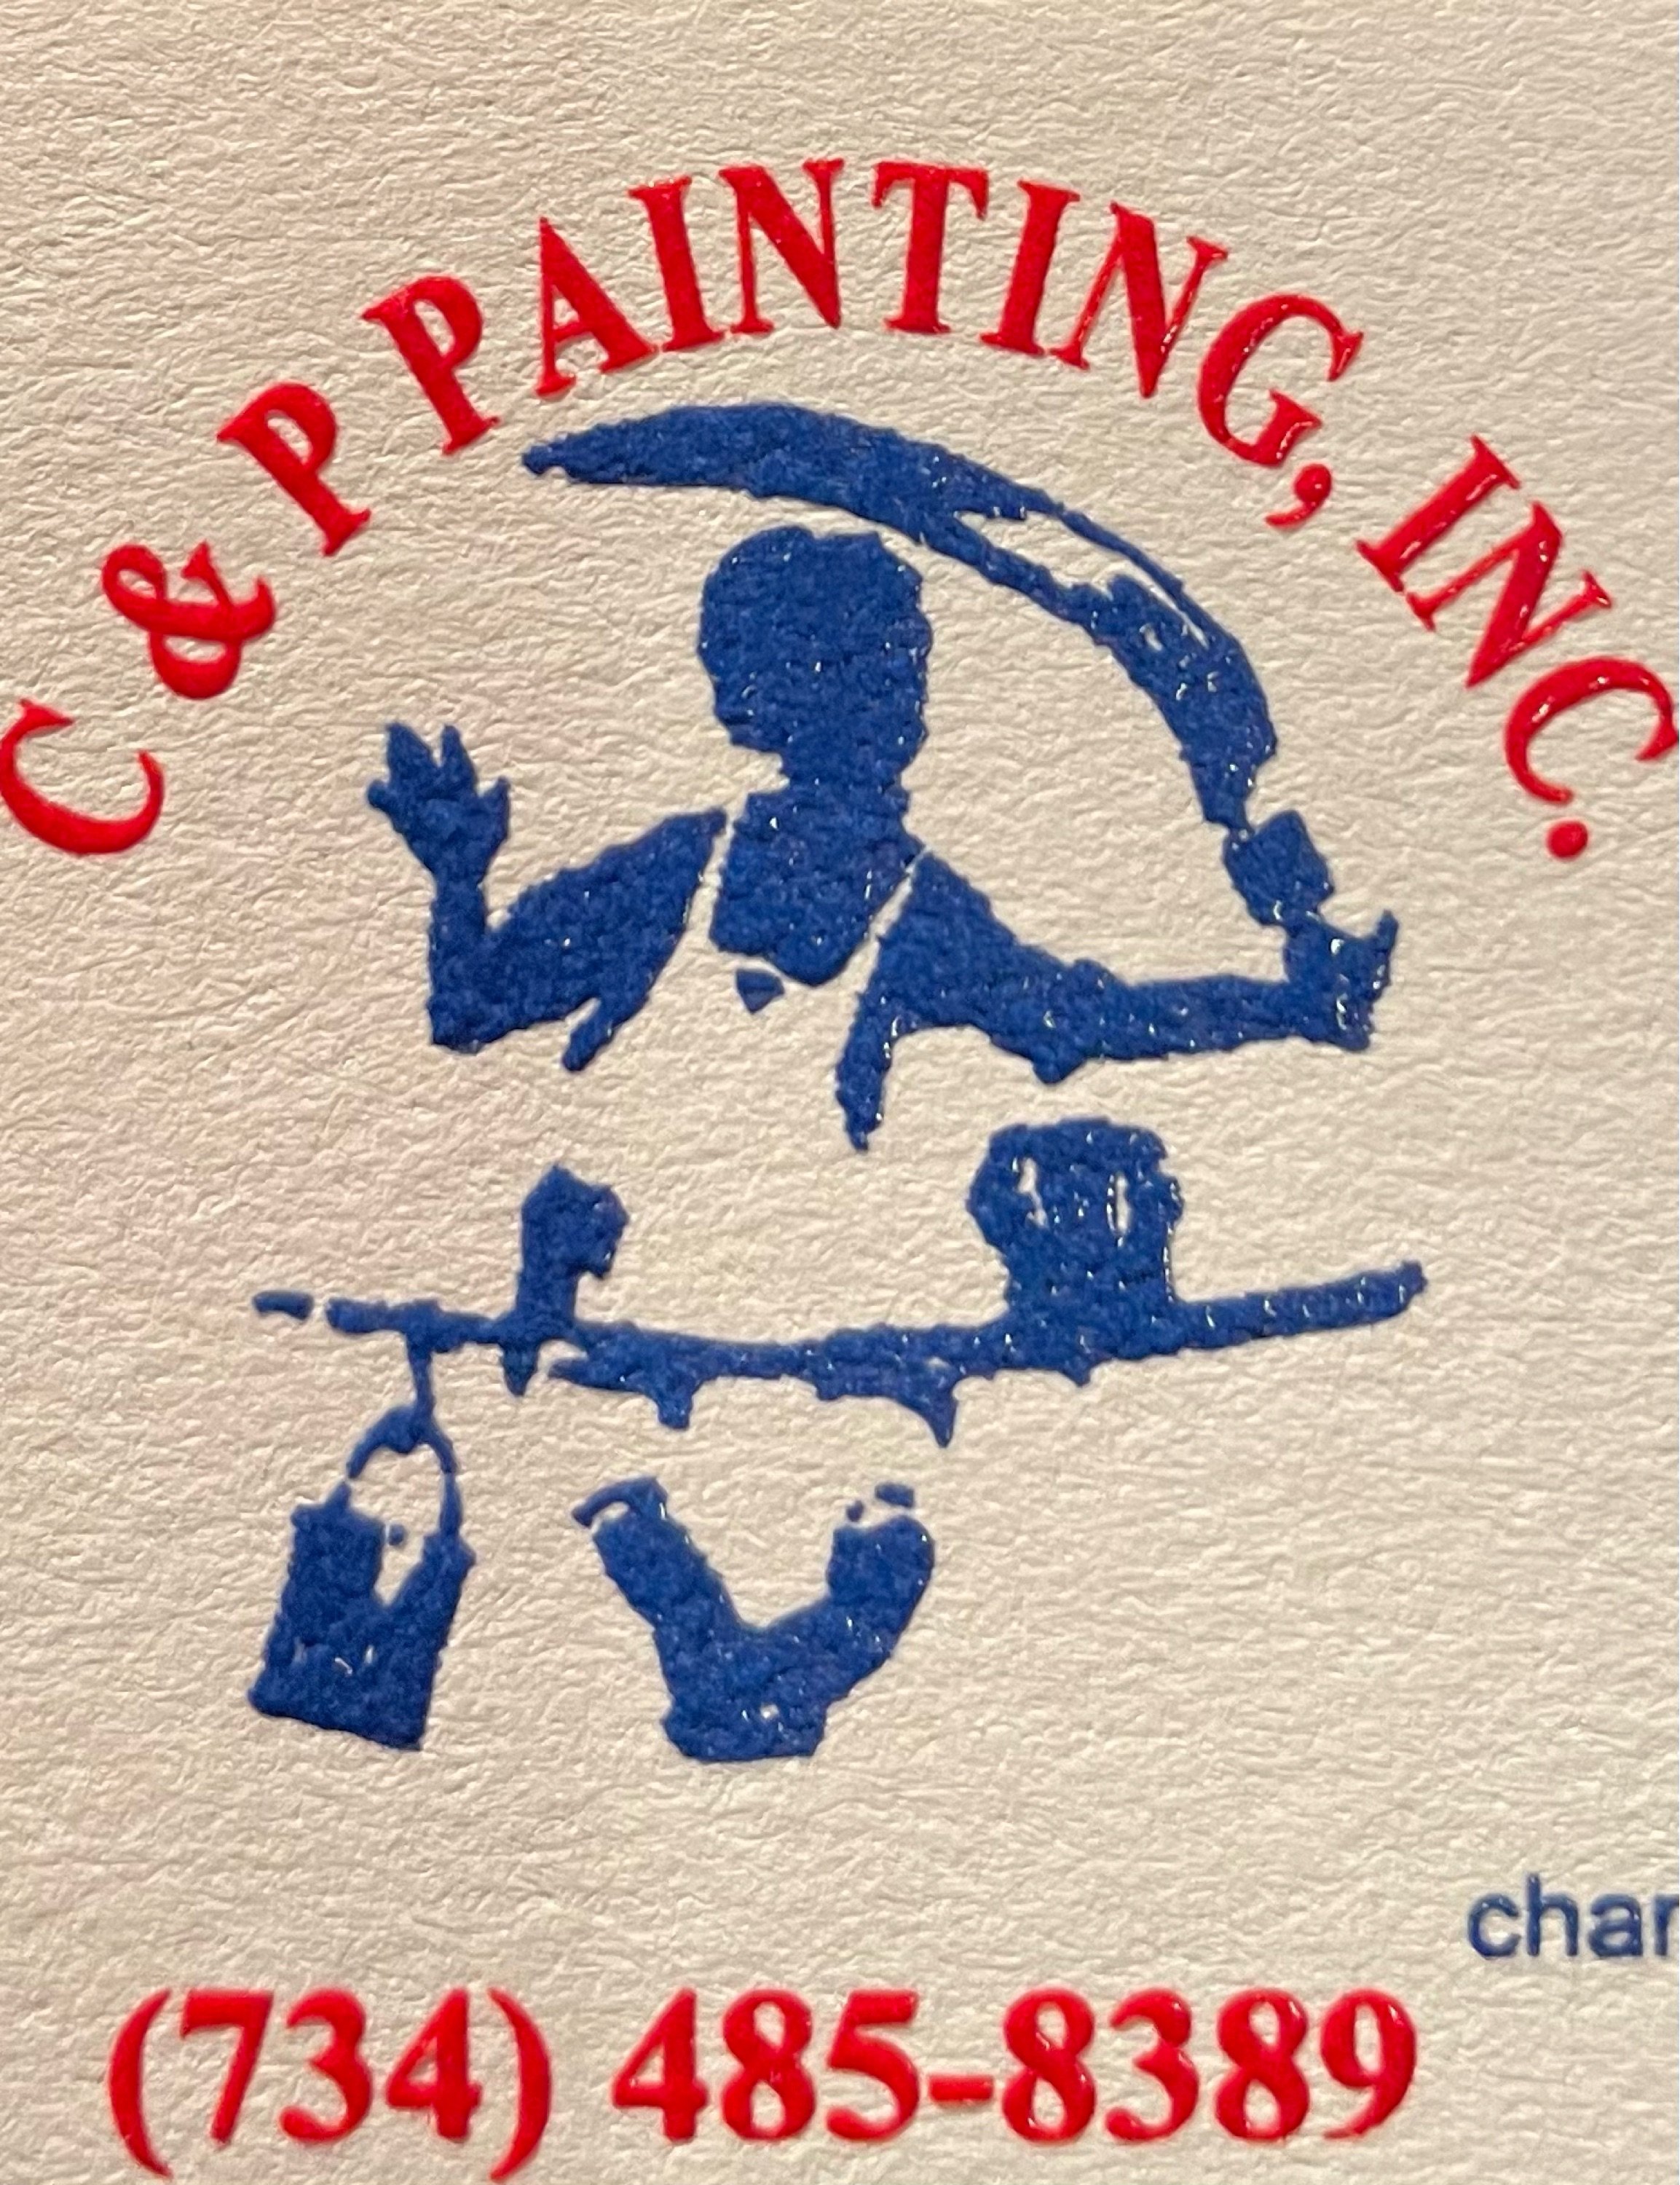 C & P Painting Logo